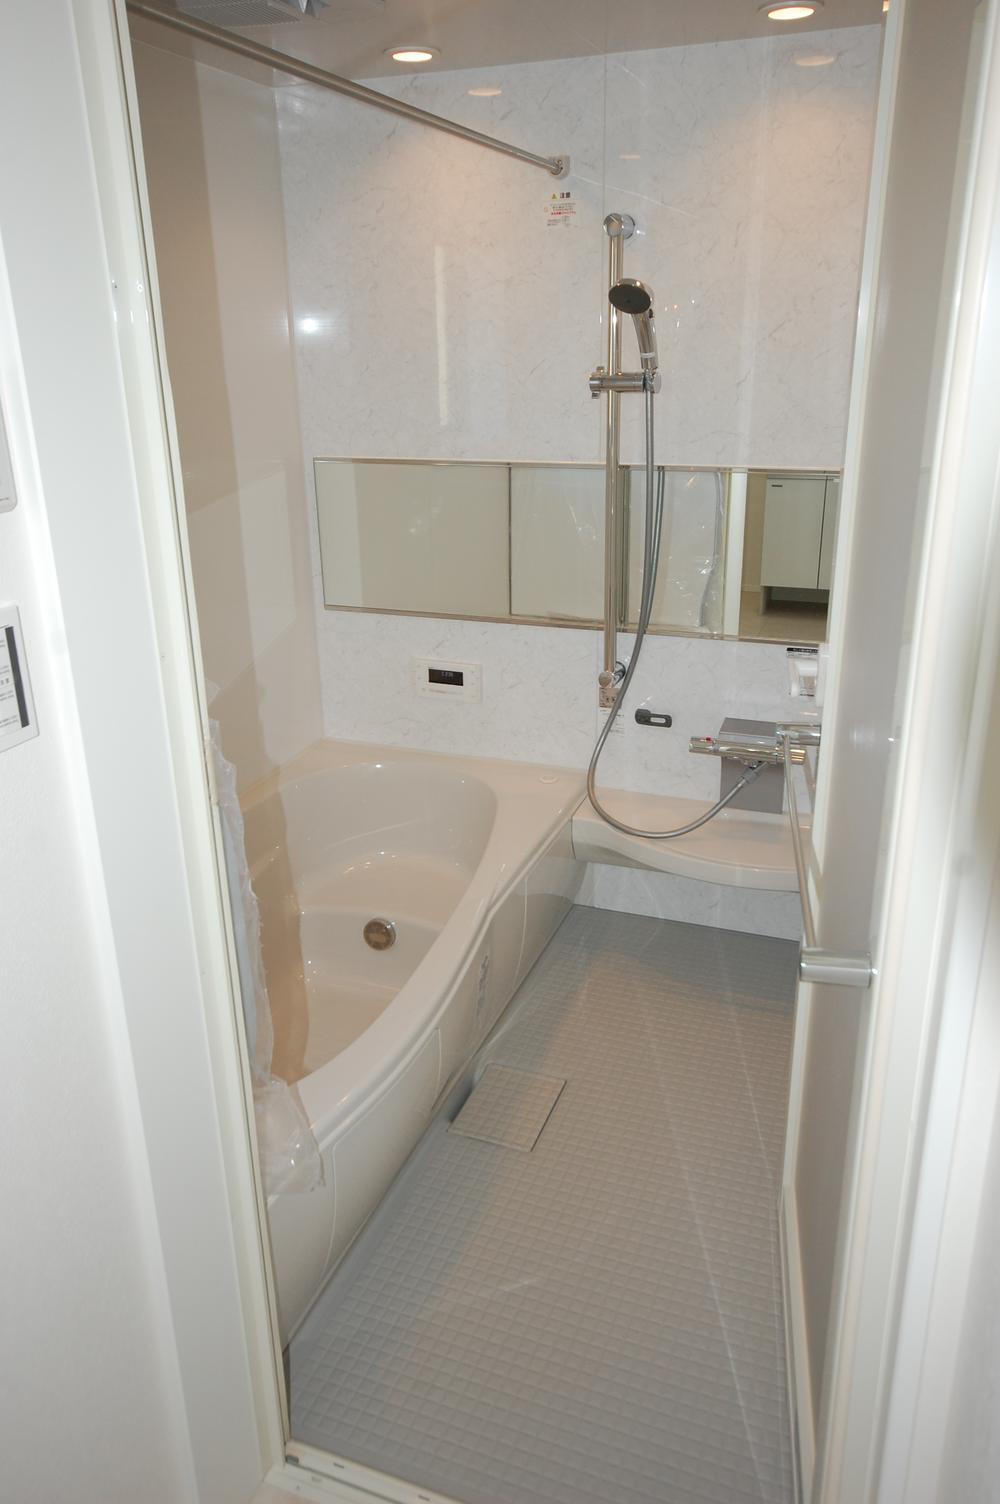 Bathroom. Resort specification! ! Lots of practical equipped with hinged door in bath towel